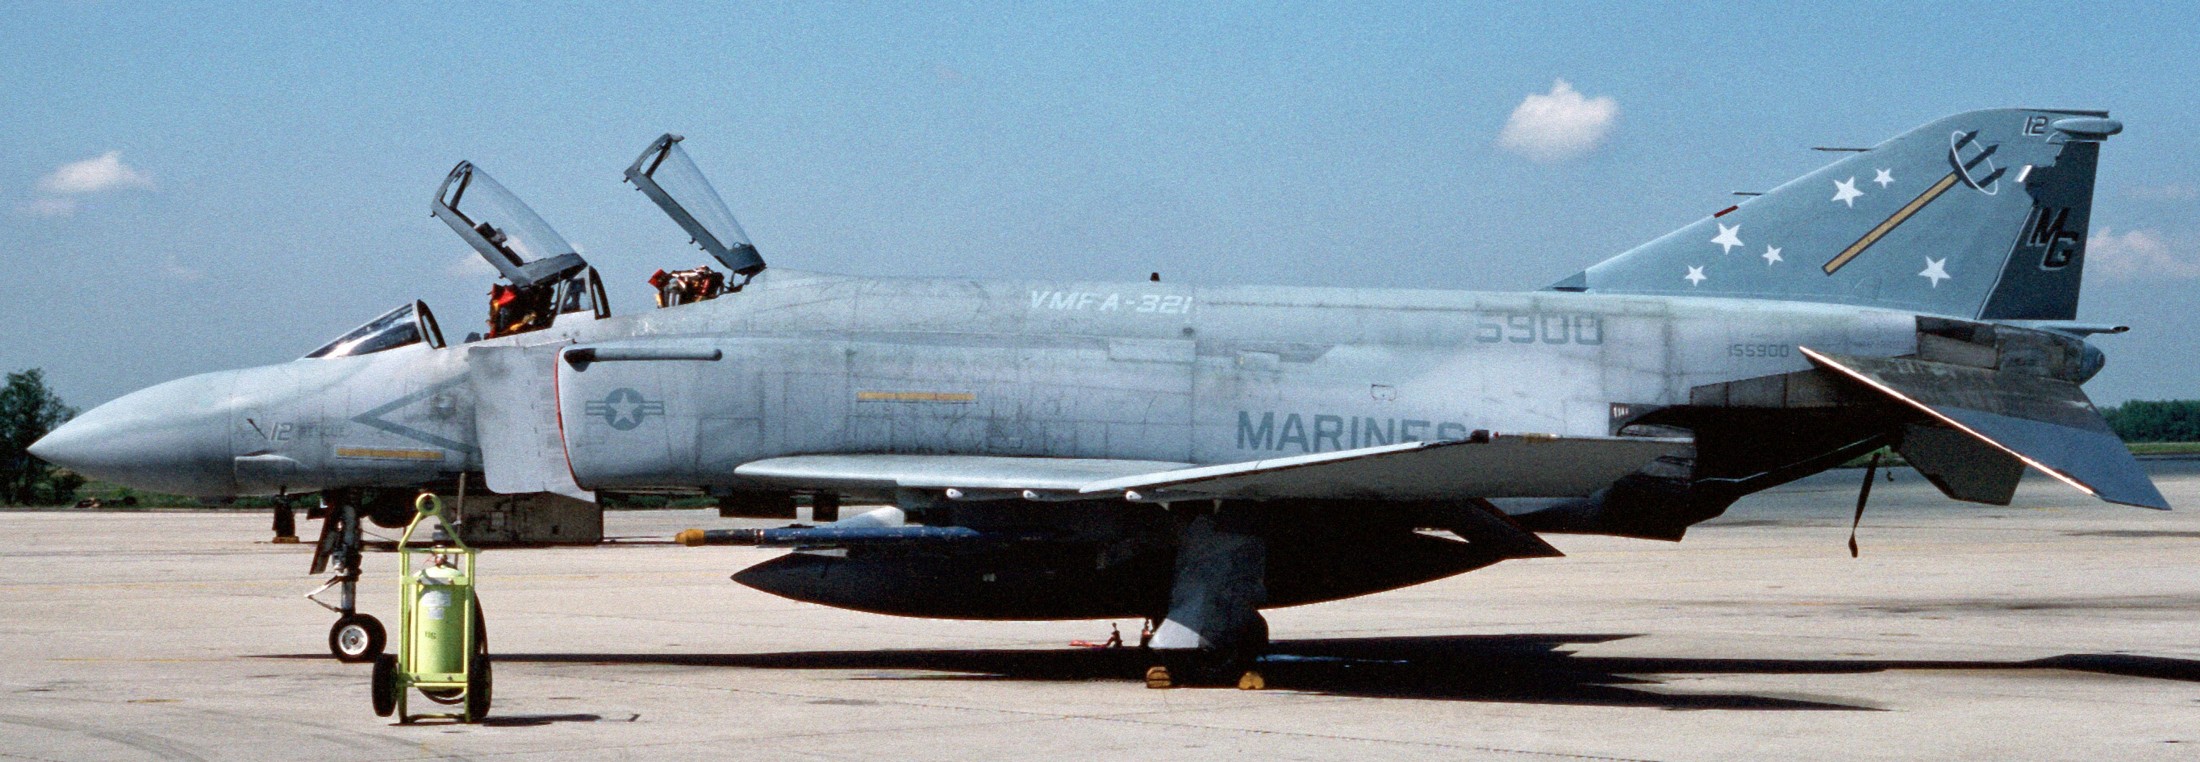 vmfa-321 hell's angels marine fighter attack squadron usmc f-4s phantom ii 09